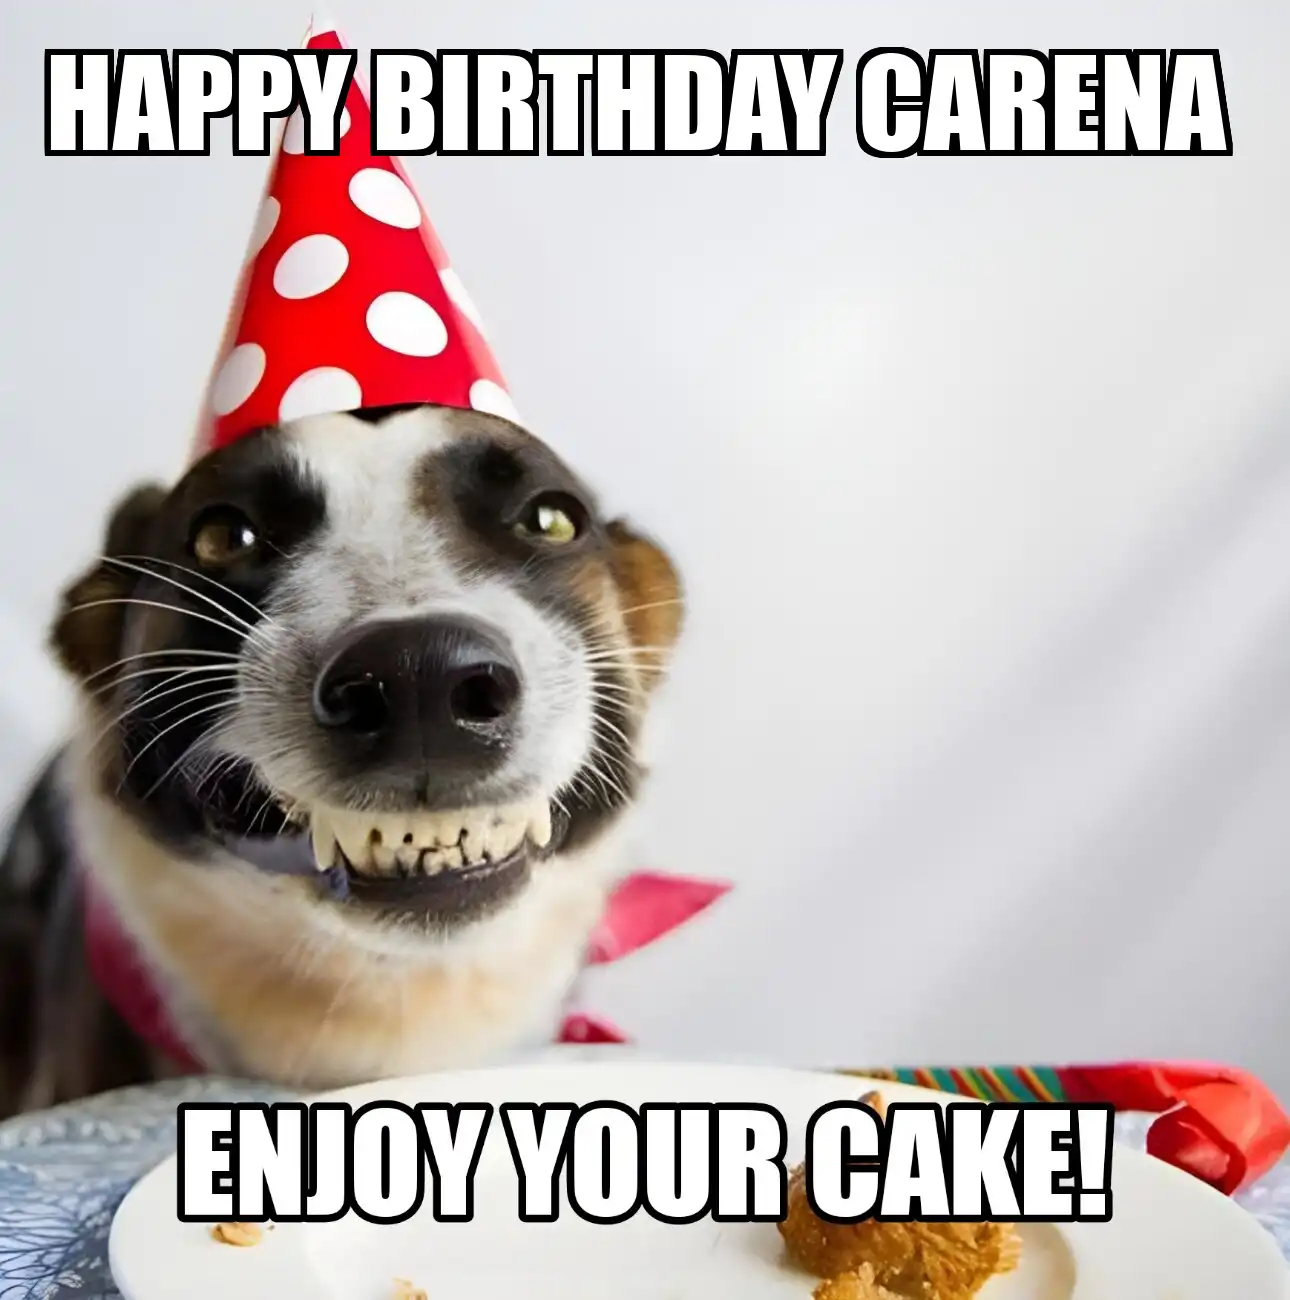 Happy Birthday Carena Enjoy Your Cake Dog Meme